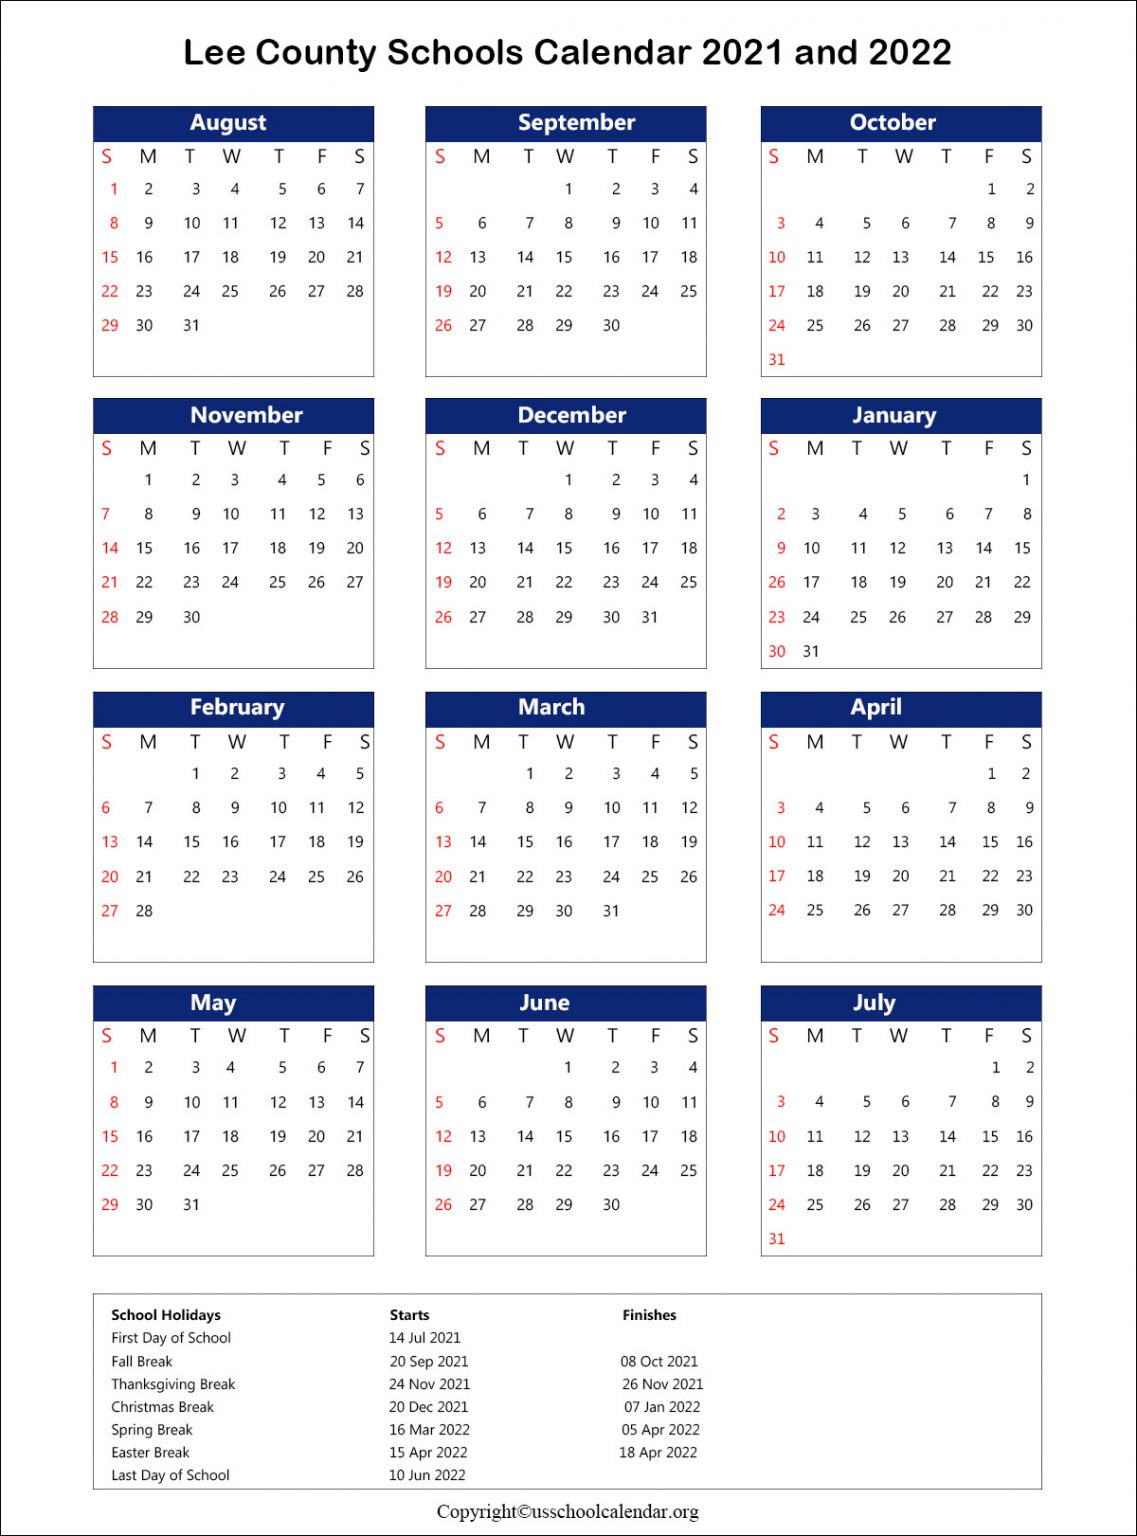 Lee County School Calendar with Holidays 2021 2022